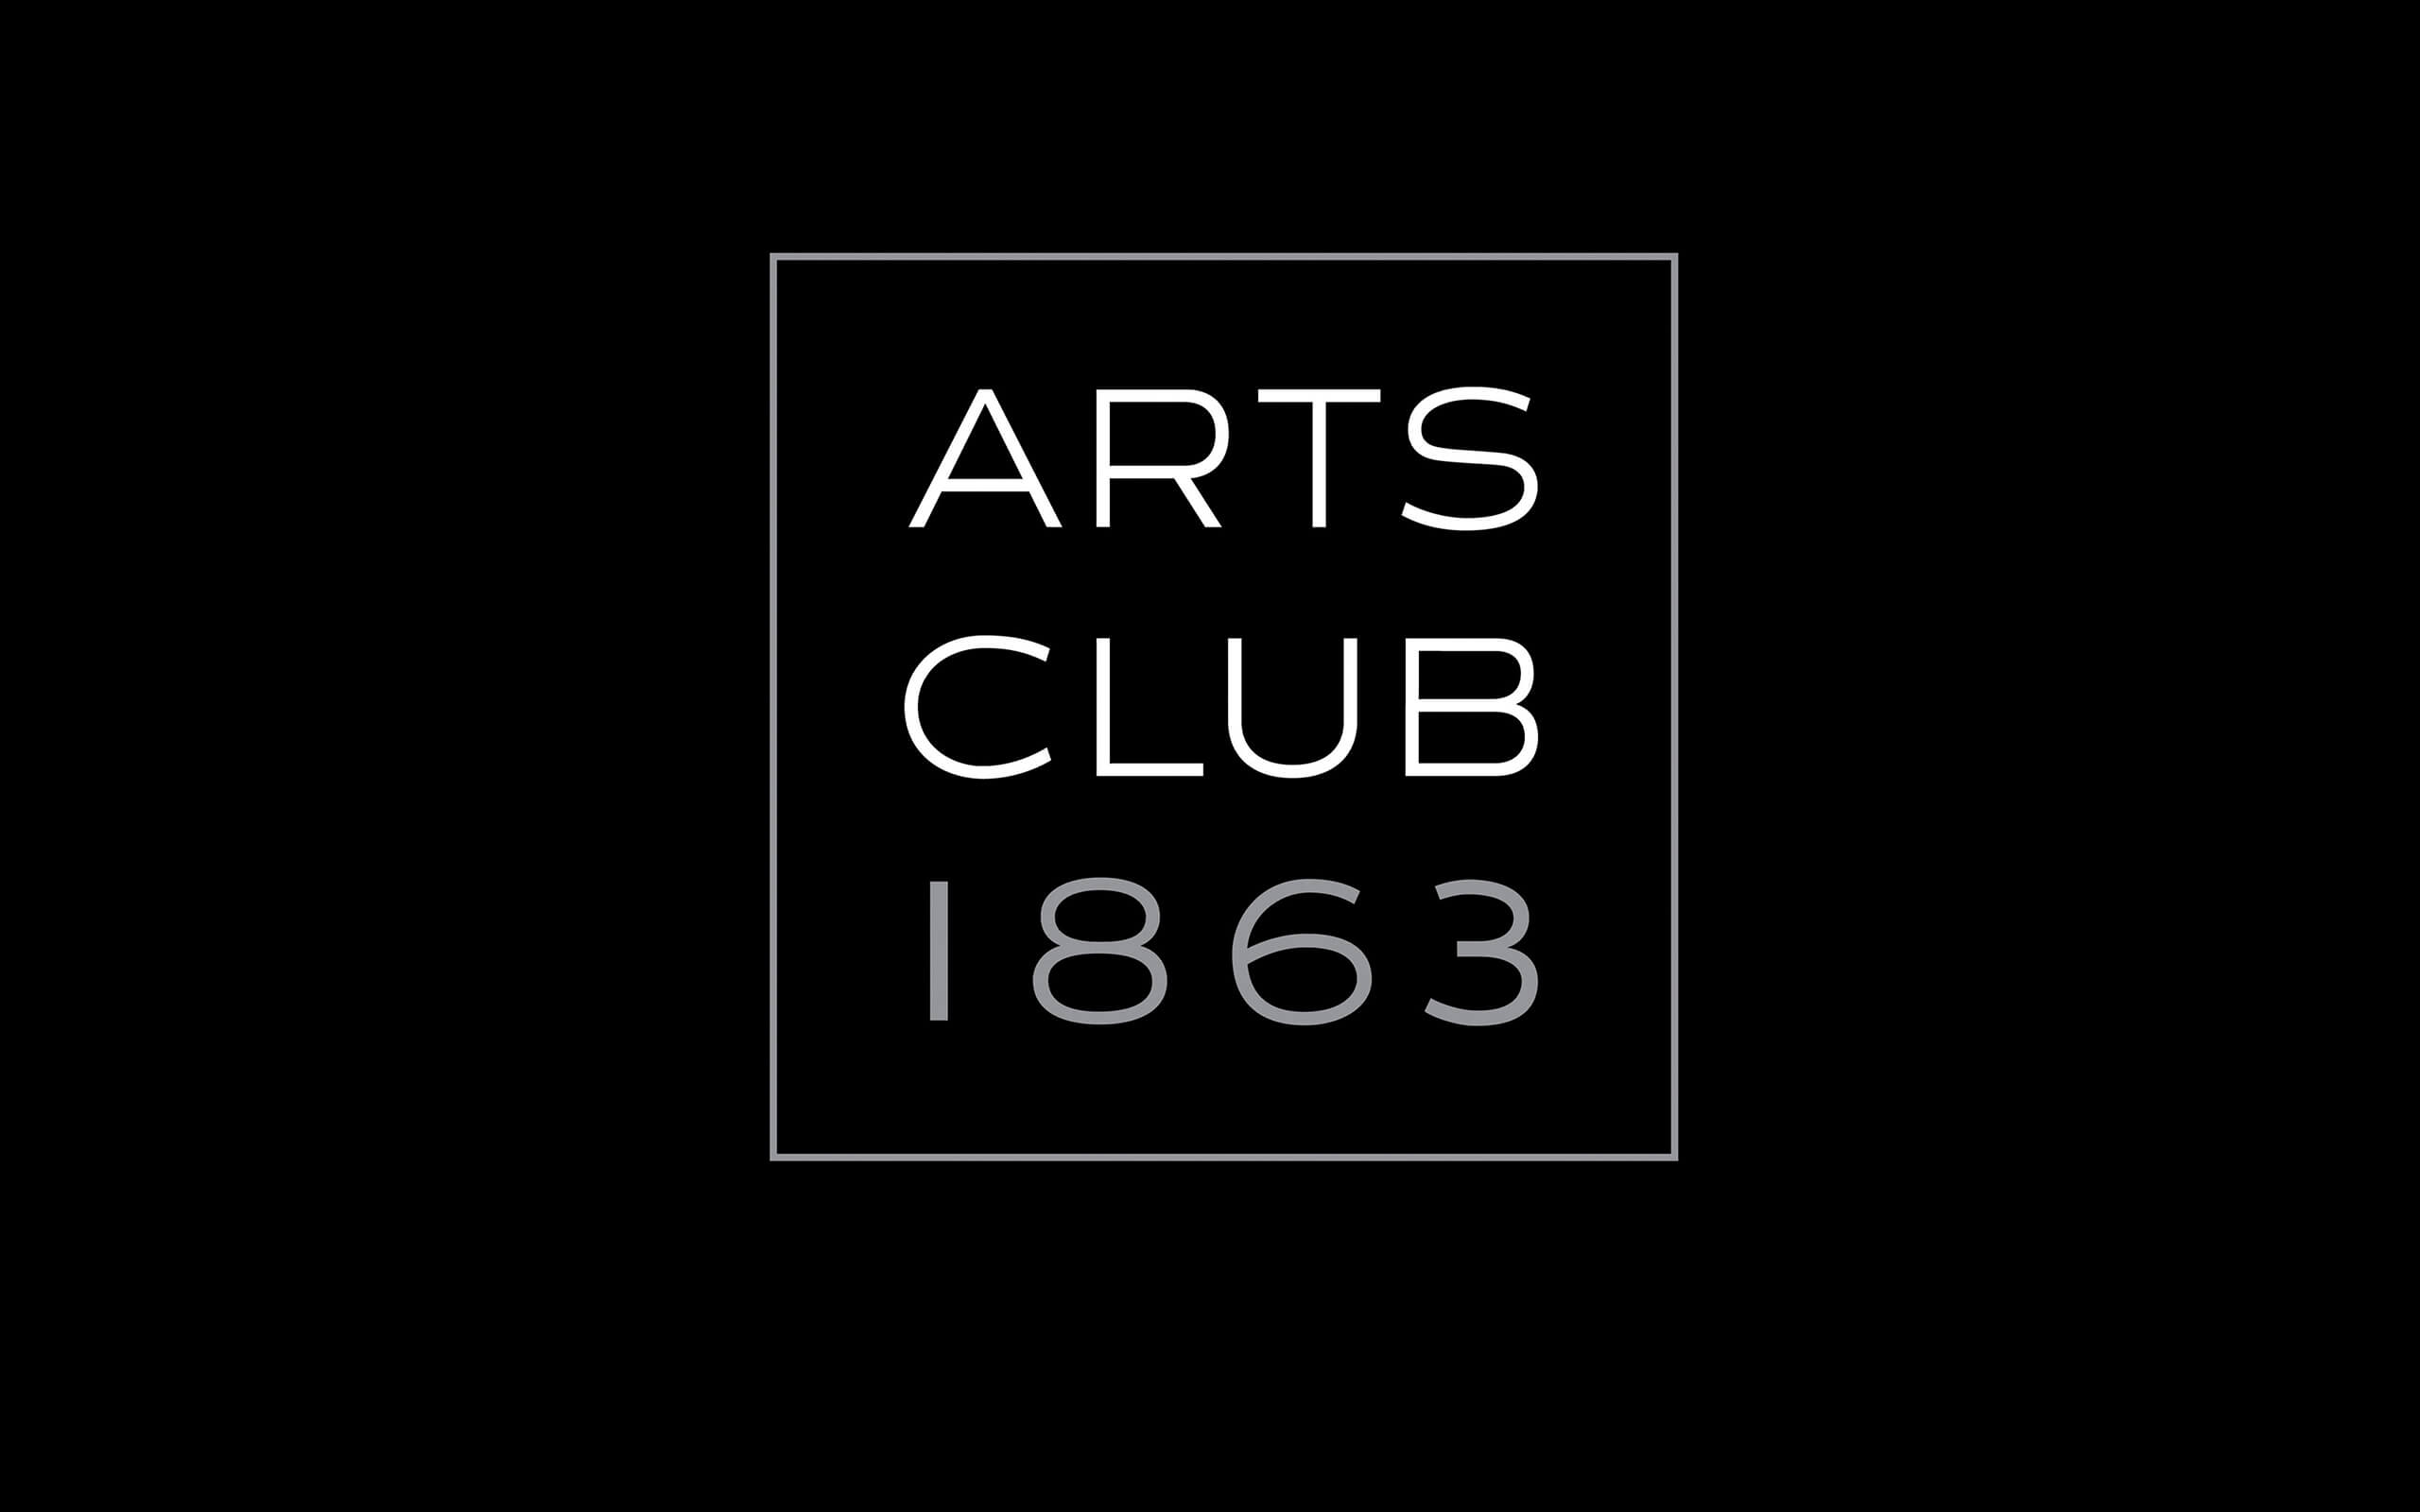 The Arts Club Mayfair logo